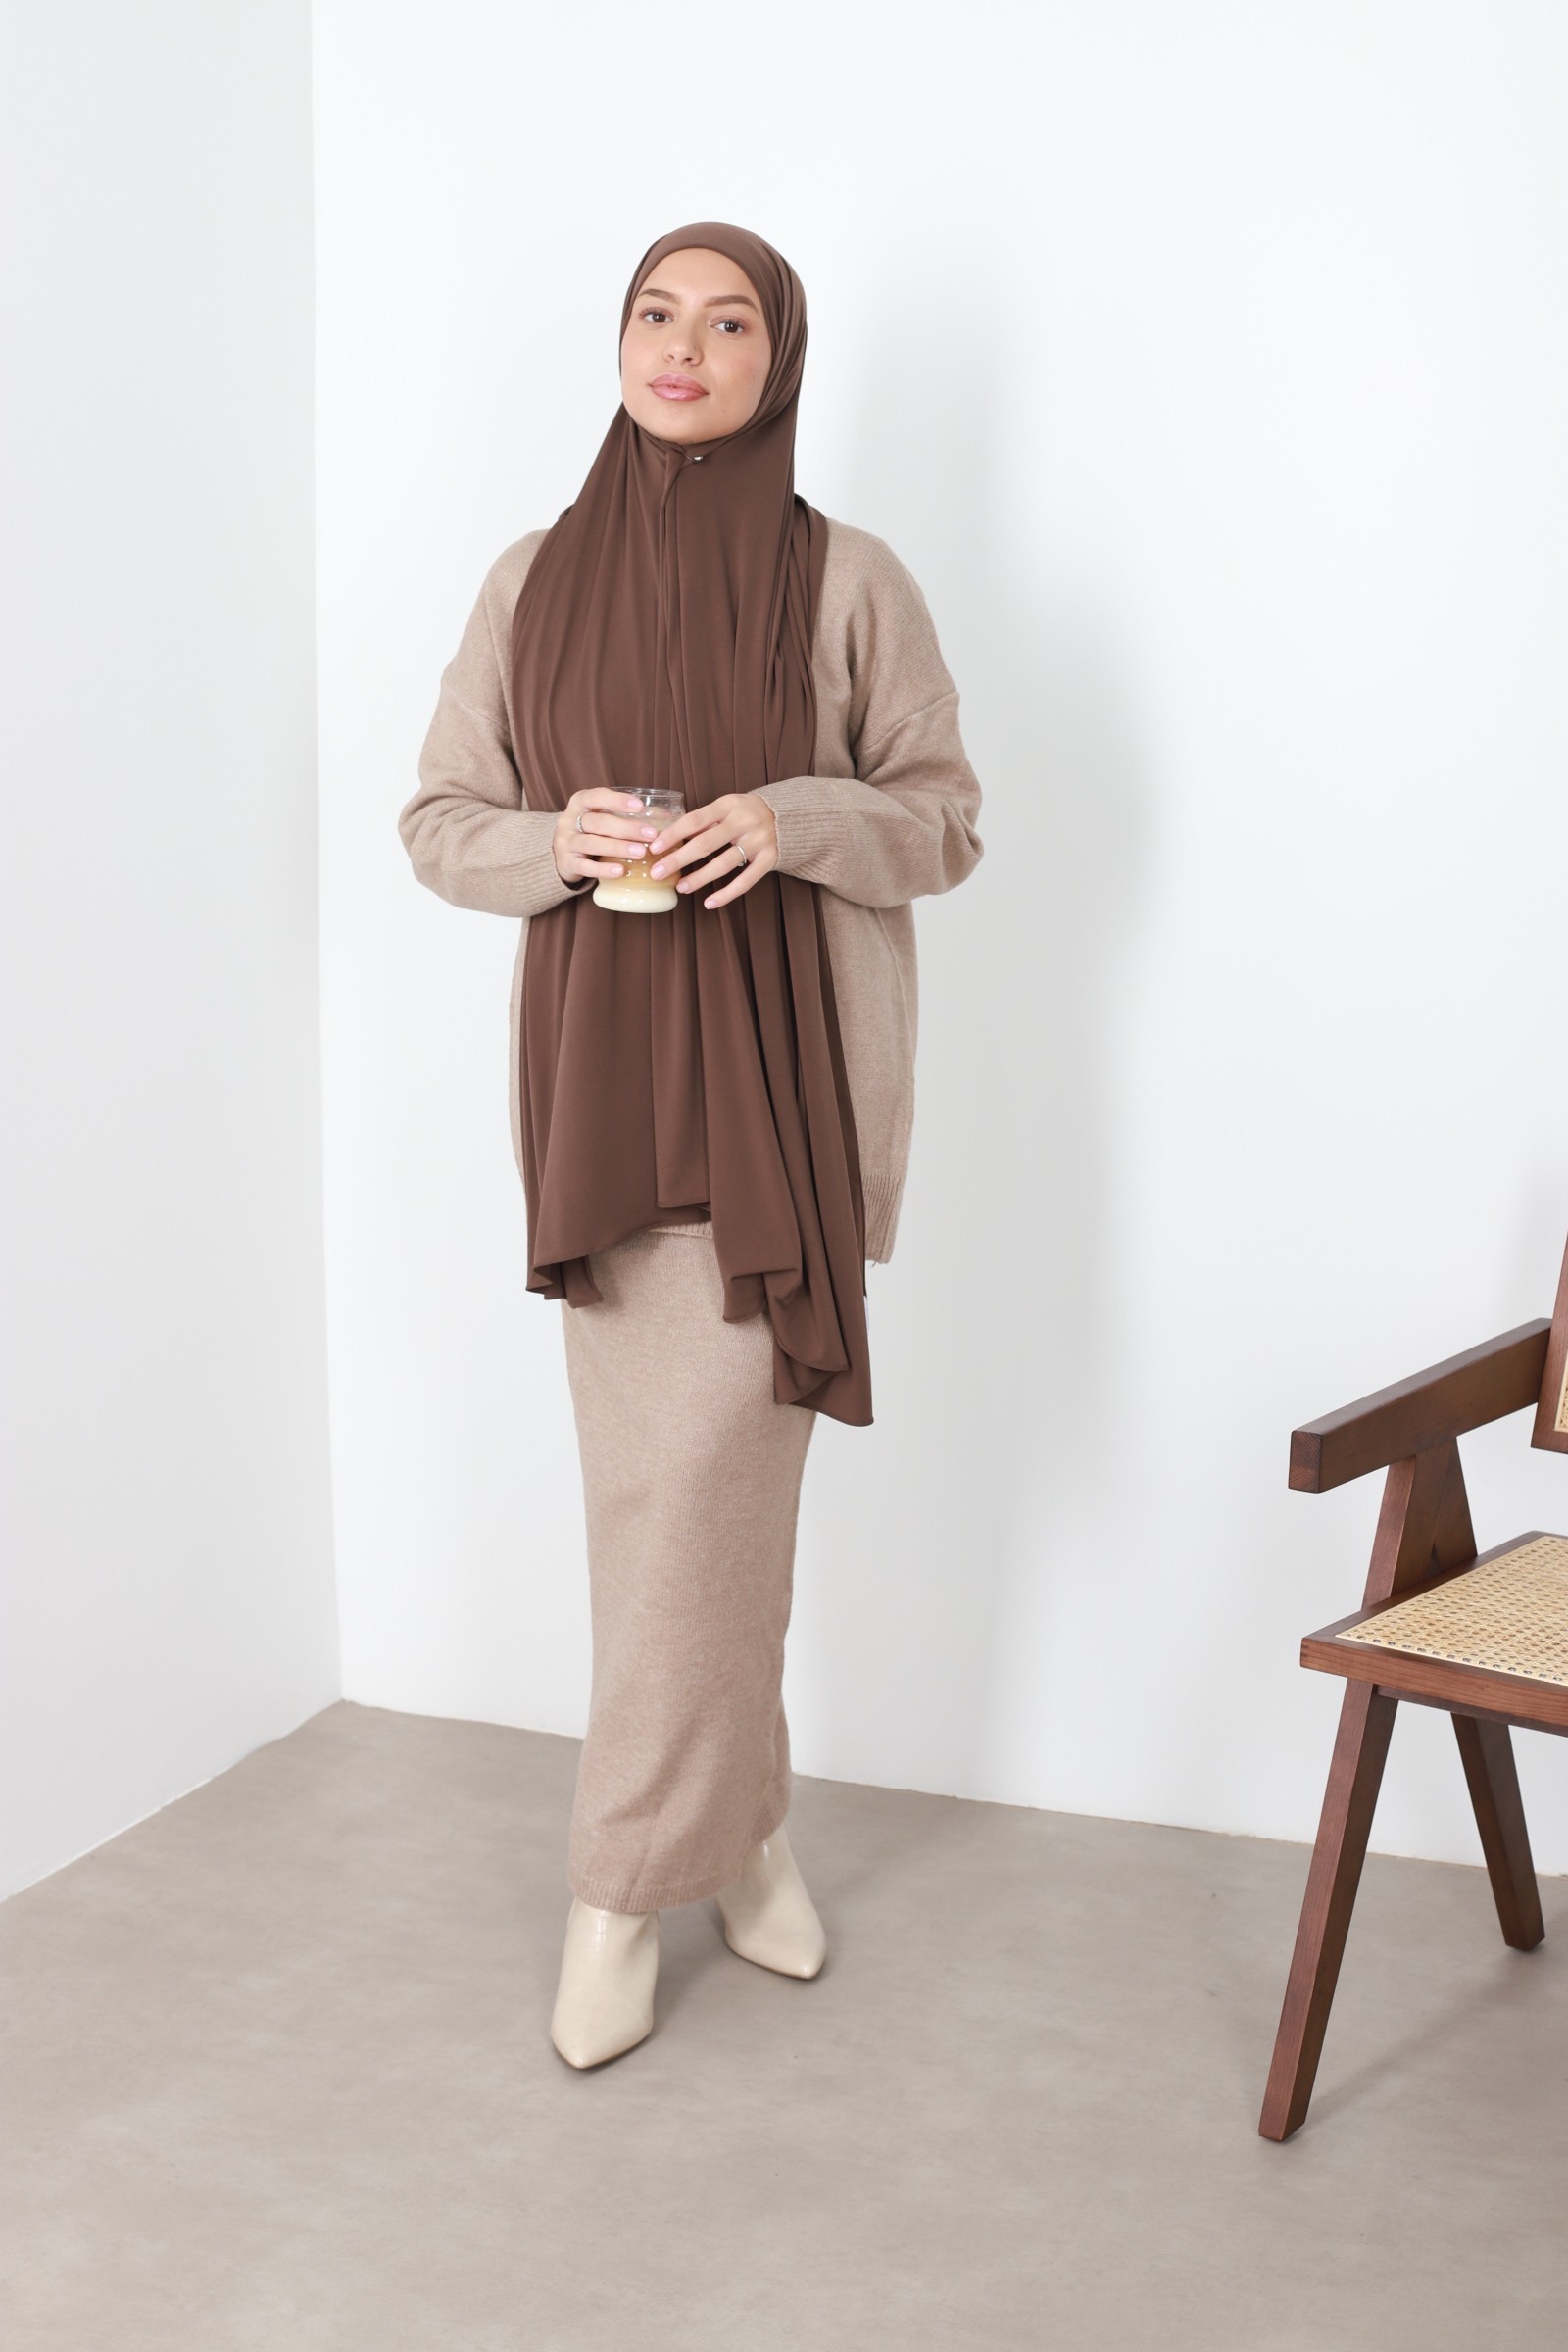 Ensemble jupe modeste fashion femme hidjab